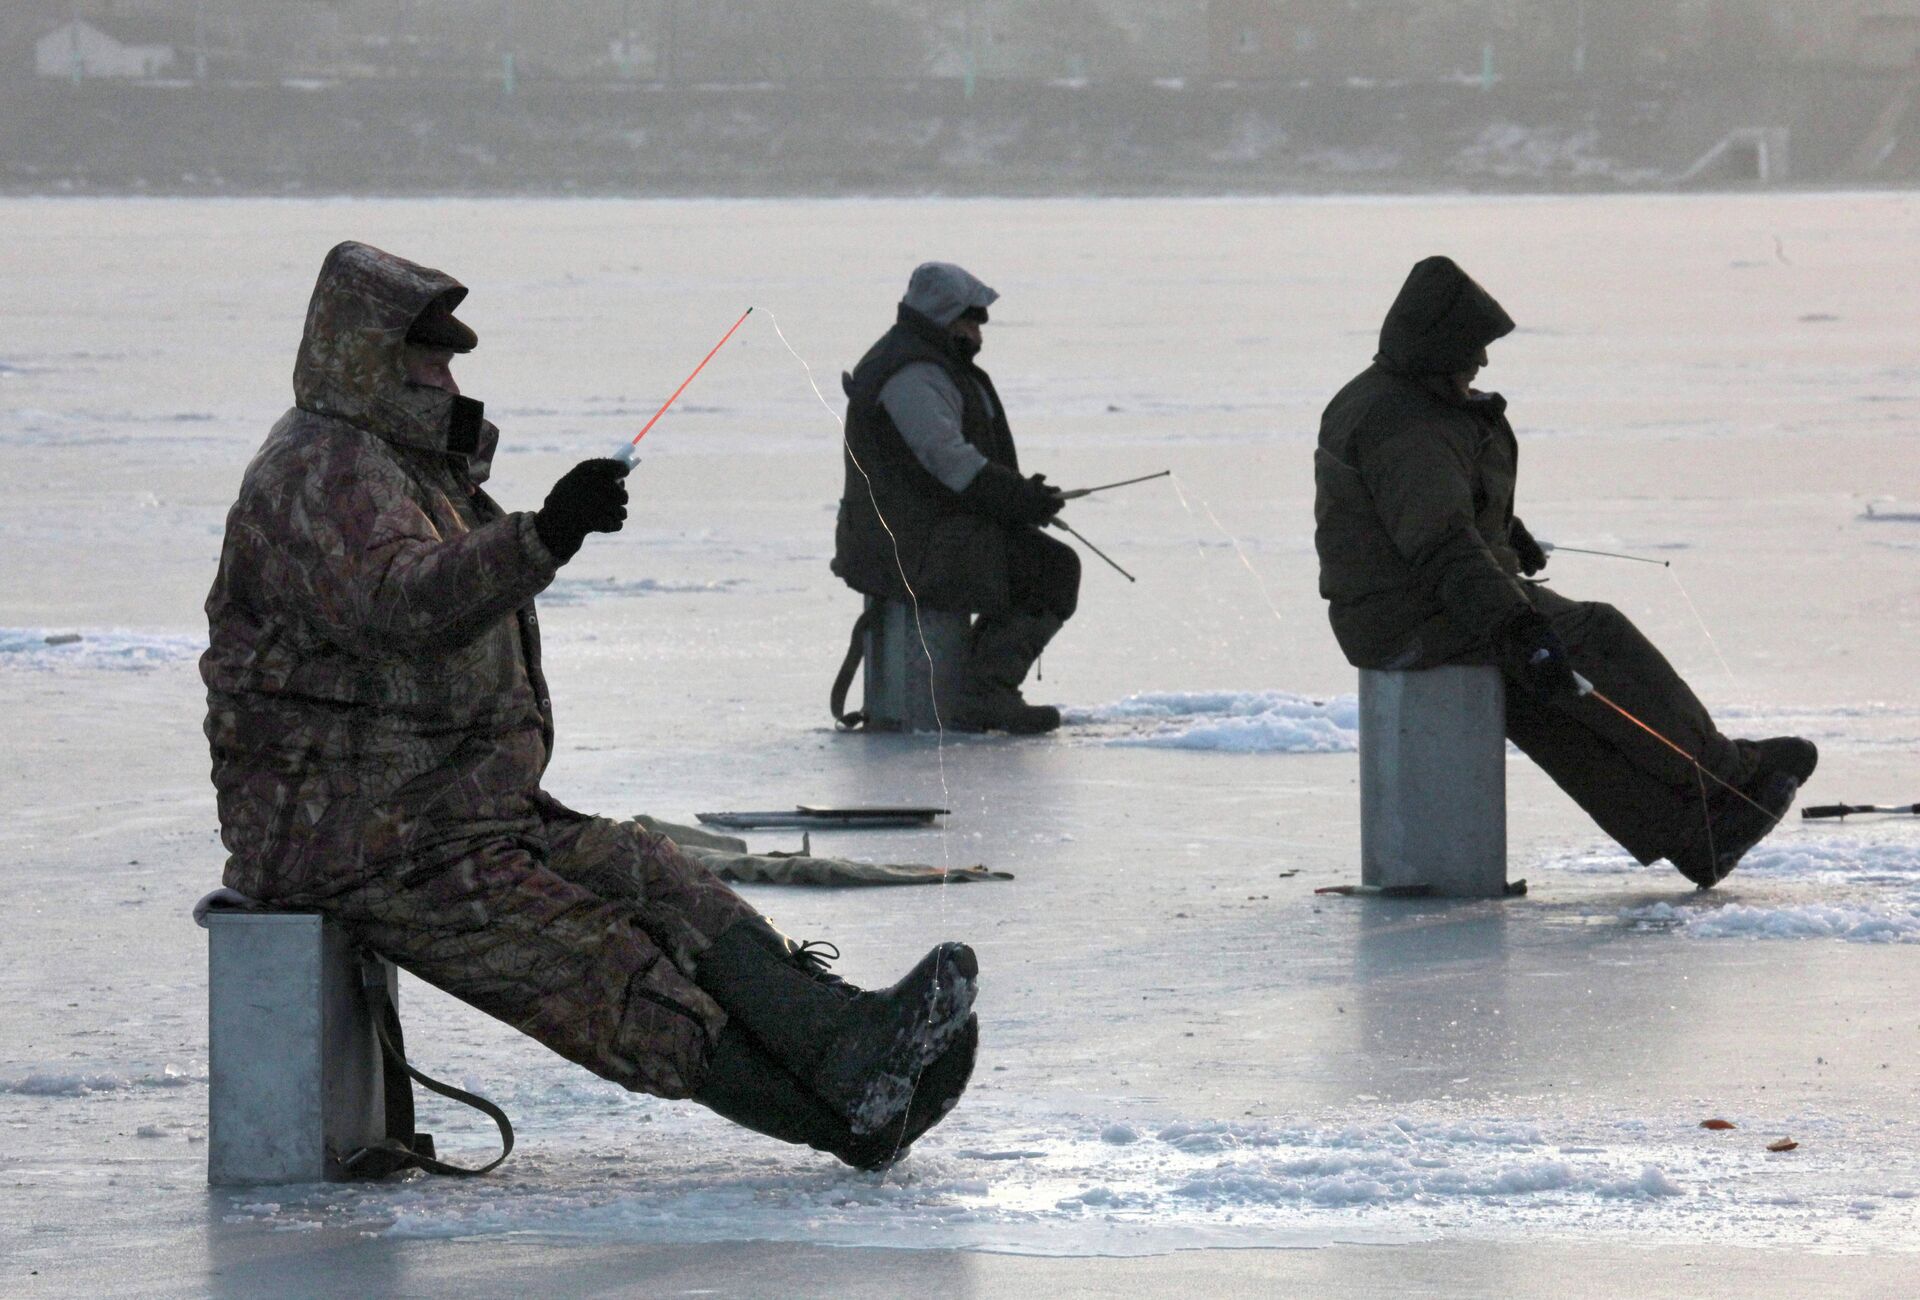 Плюсы зимней рыбалки. Рыбаки на льду. Зимняя рыбалка. Зимняя рыбалка на льду. Рыбак зимой.